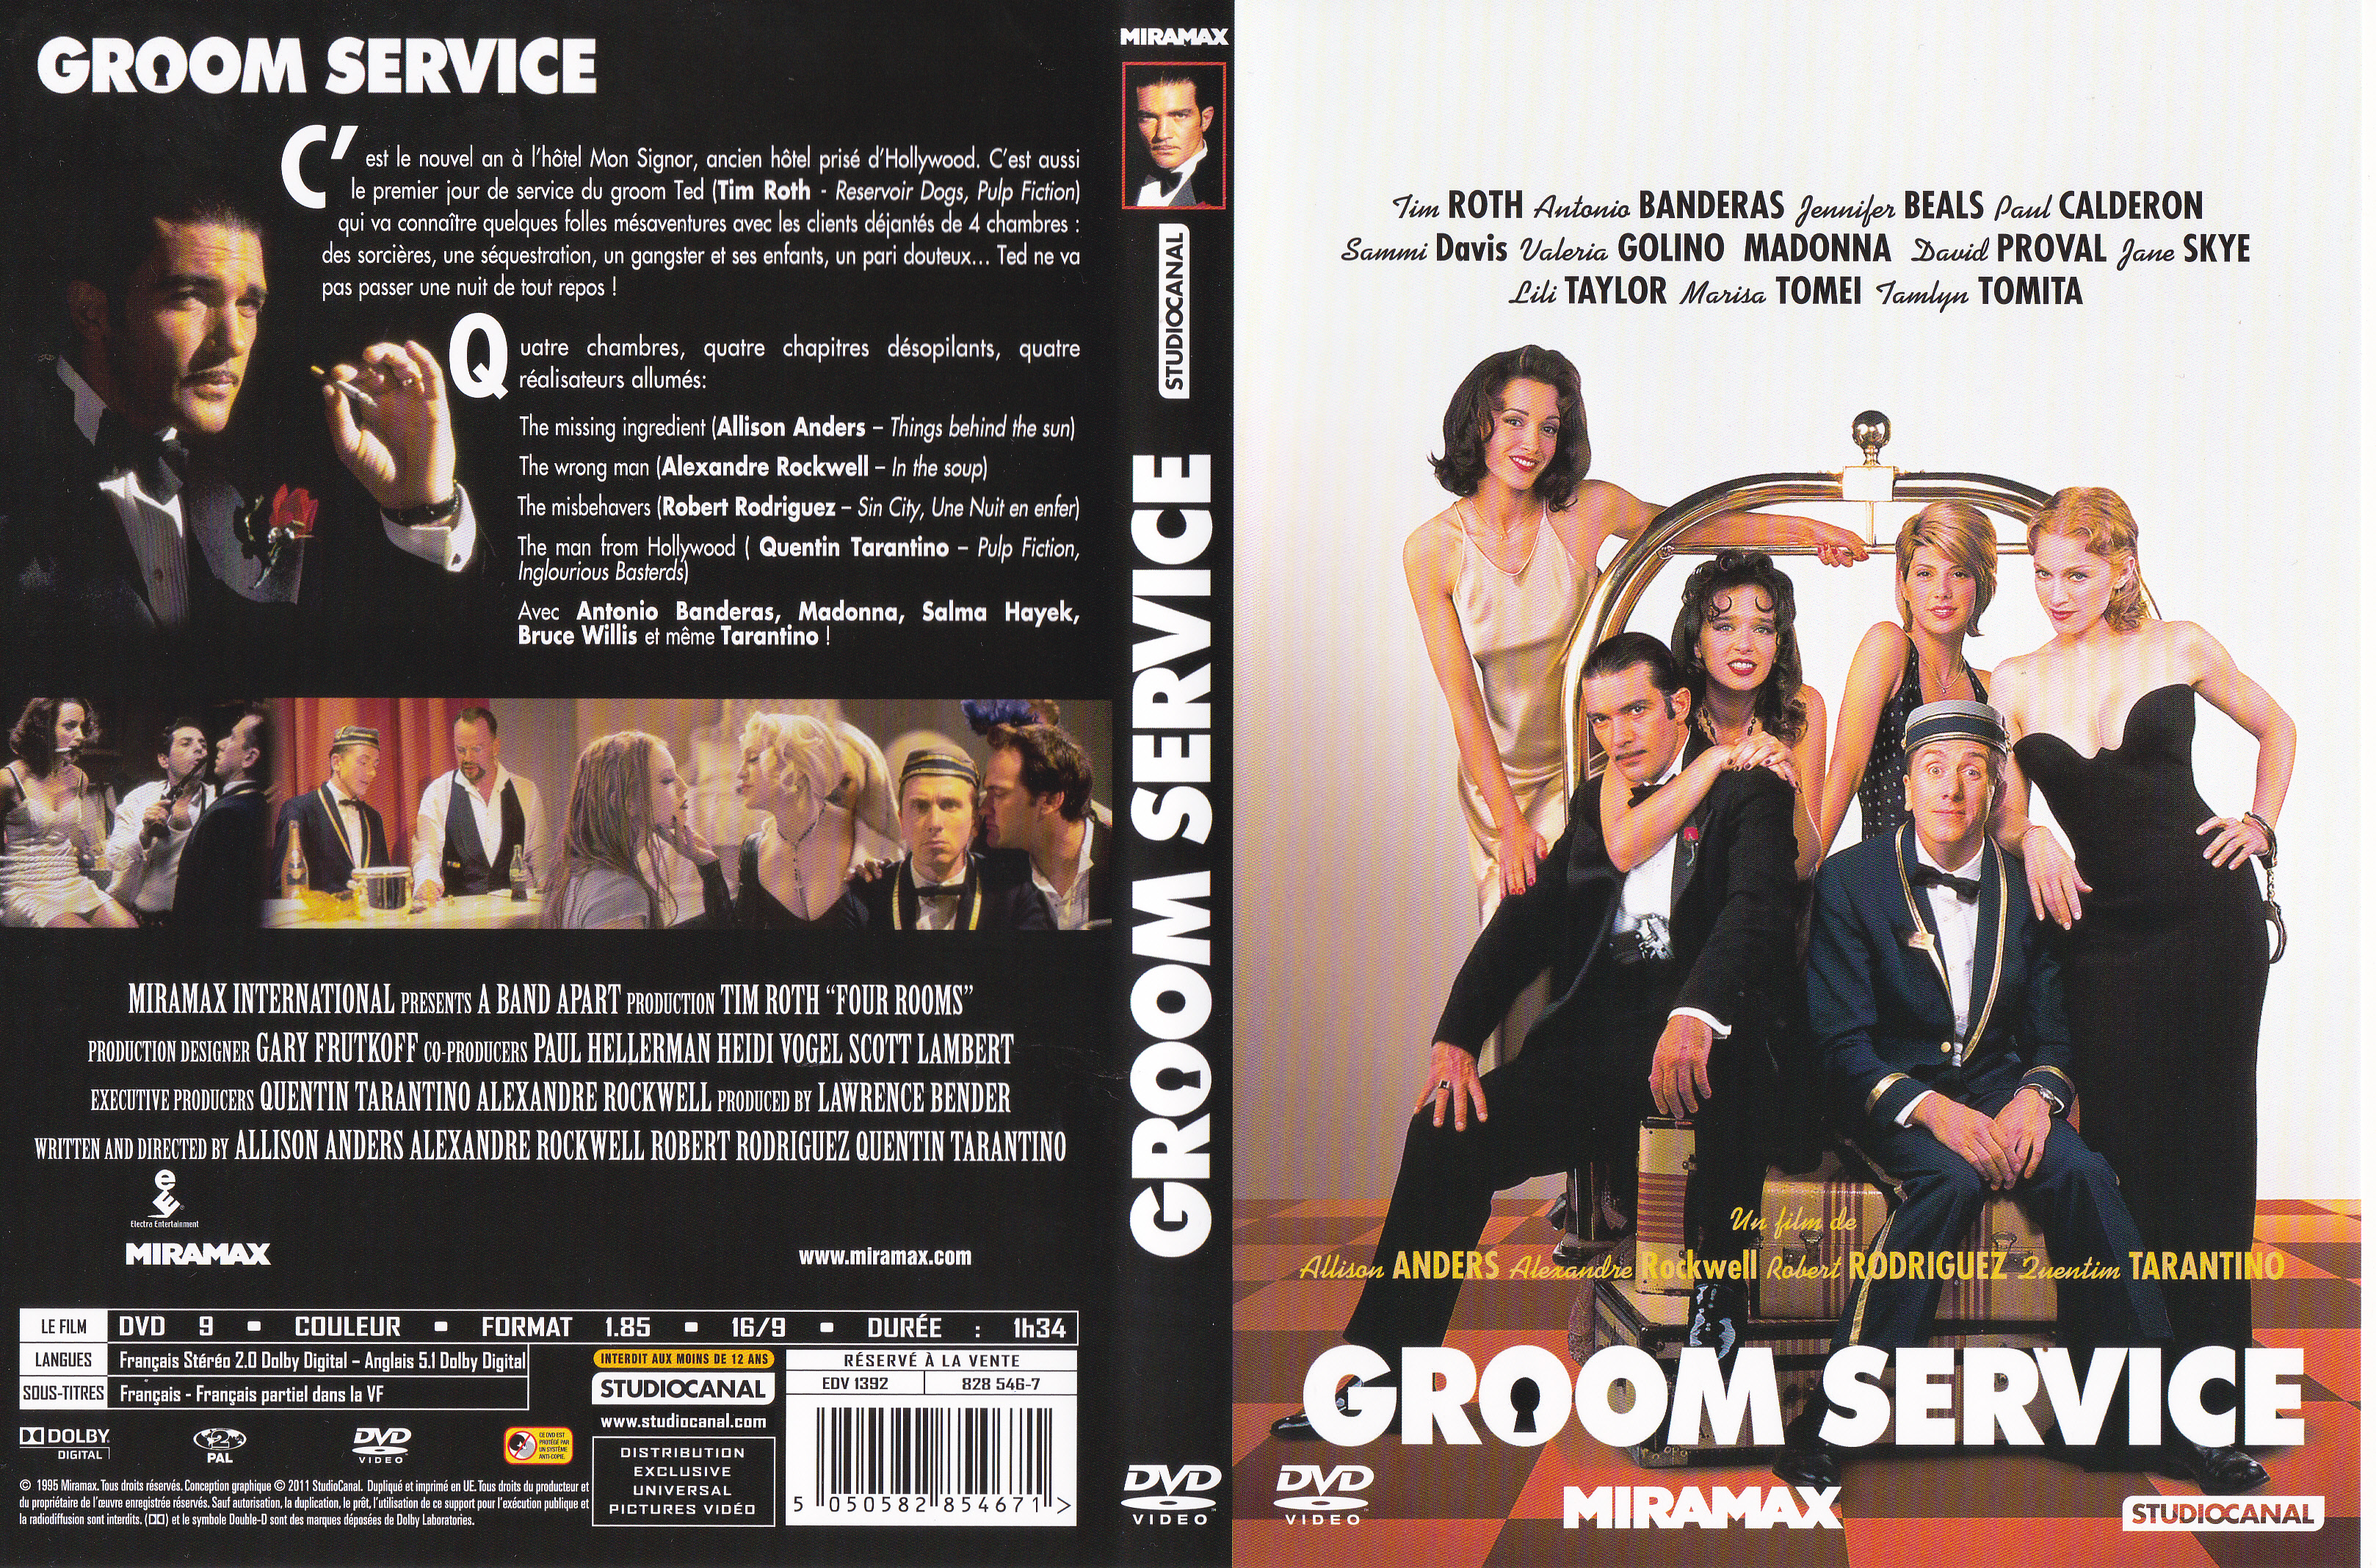 Jaquette DVD Groom service